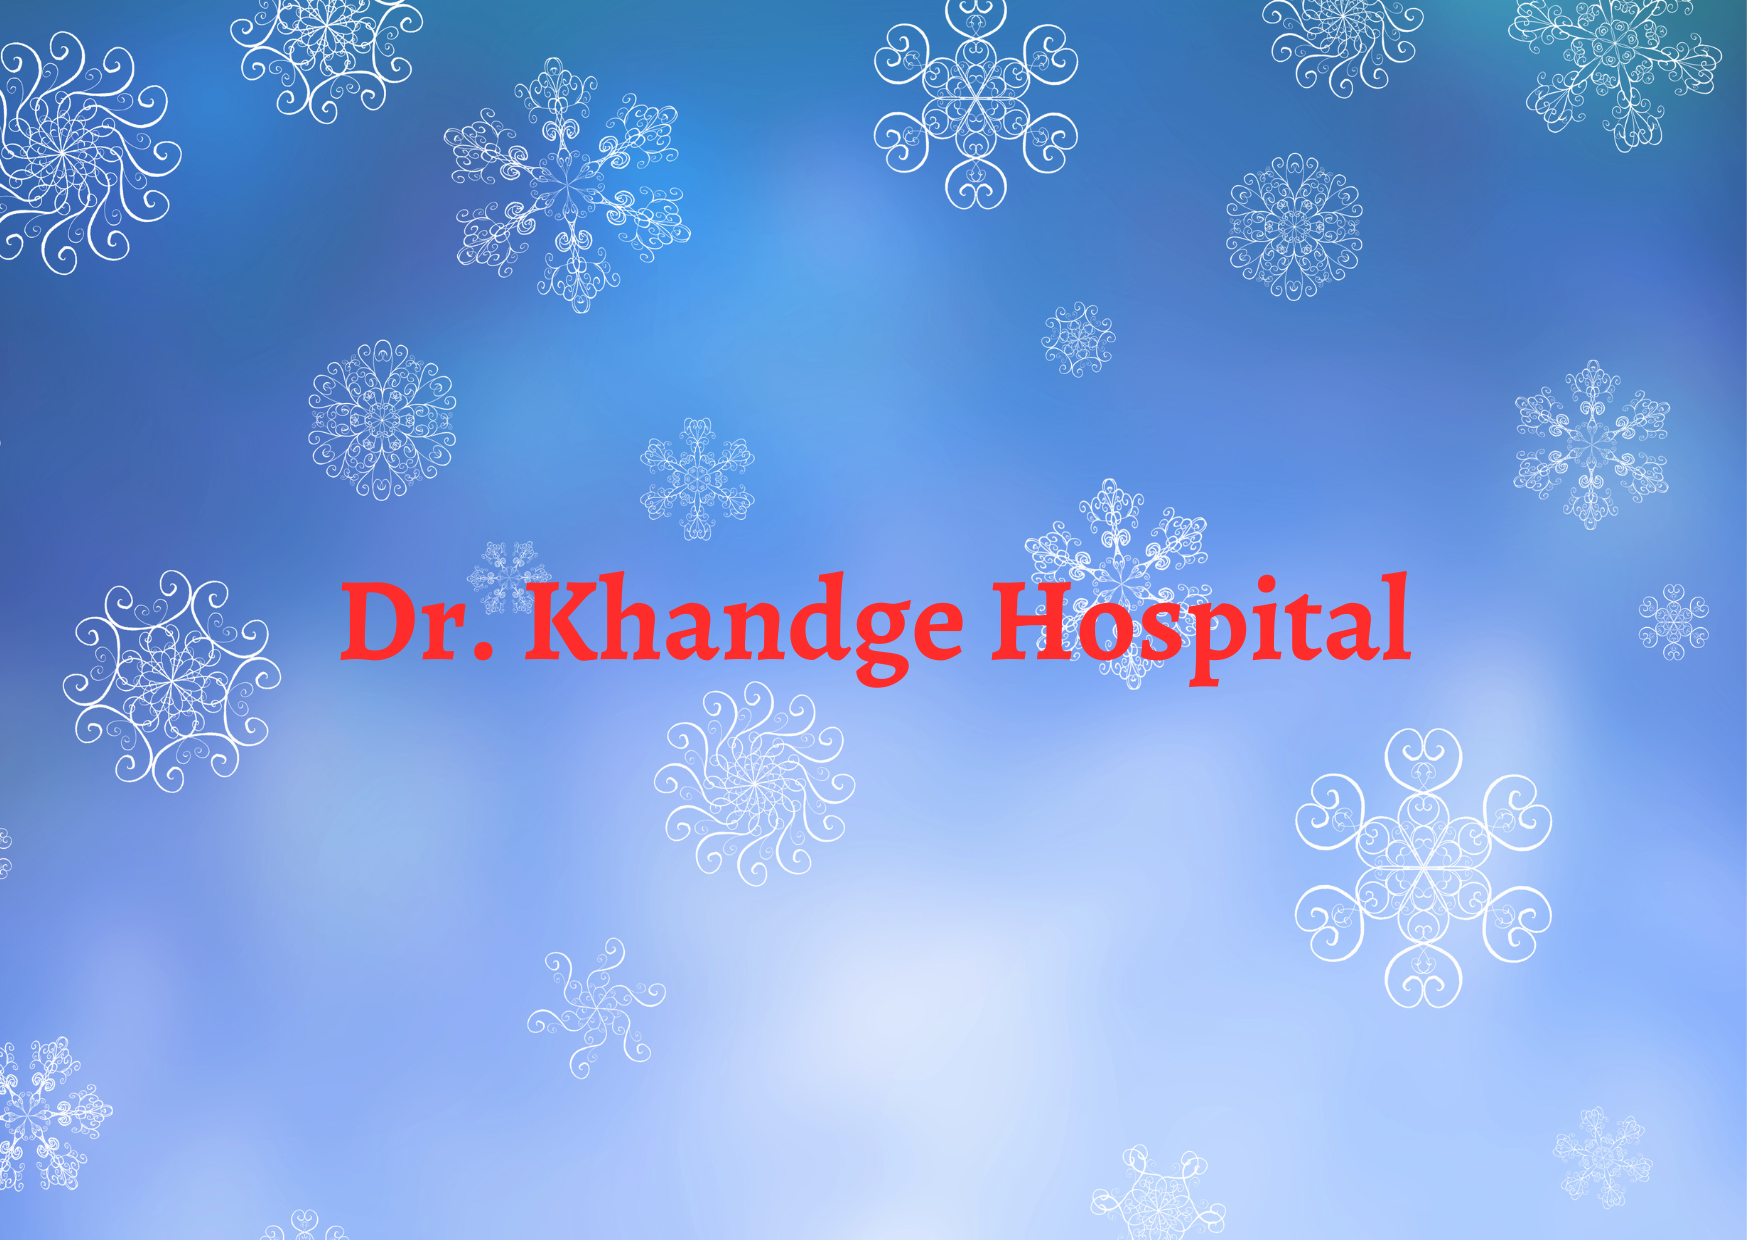 Dr. Khandge Hospital,   